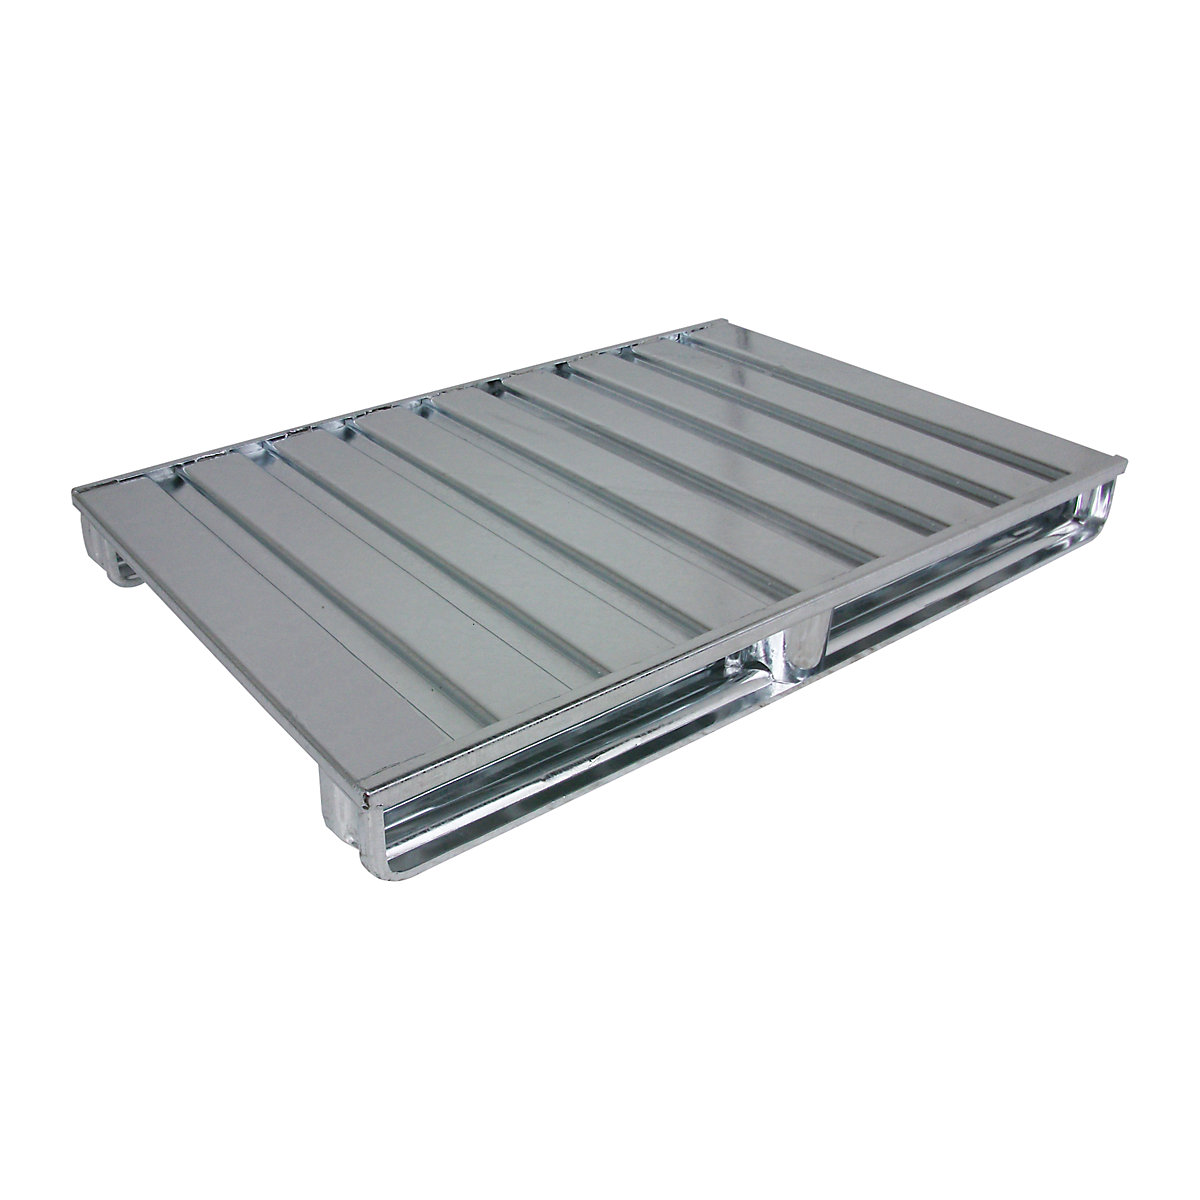 Palet plat din oțel – Heson, lung. x lăț. 1200 x 800 mm, capacitate portantă 2000 kg, zincat, minimum 10 buc.